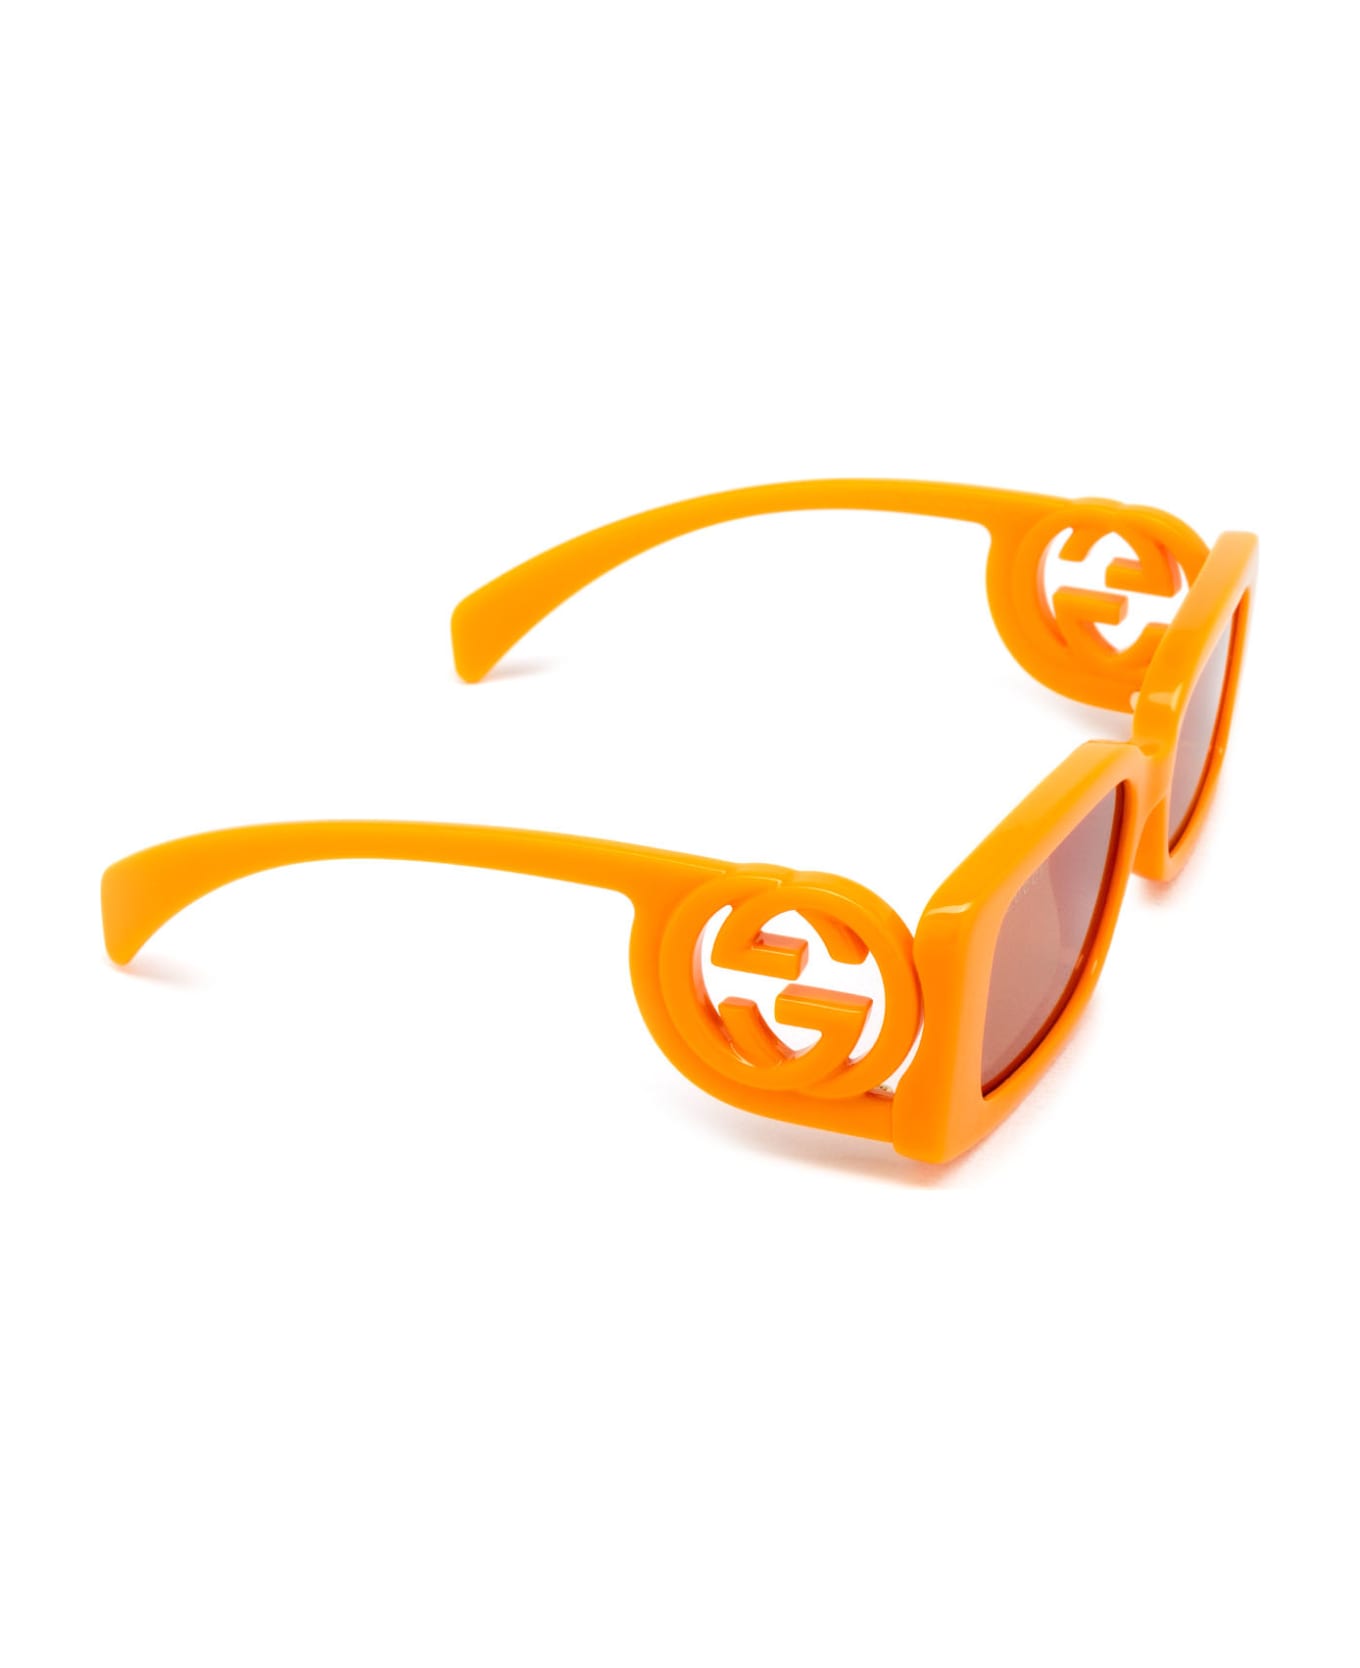 Gucci Eyewear Gg1325s Orange Sunglasses - Orange サングラス